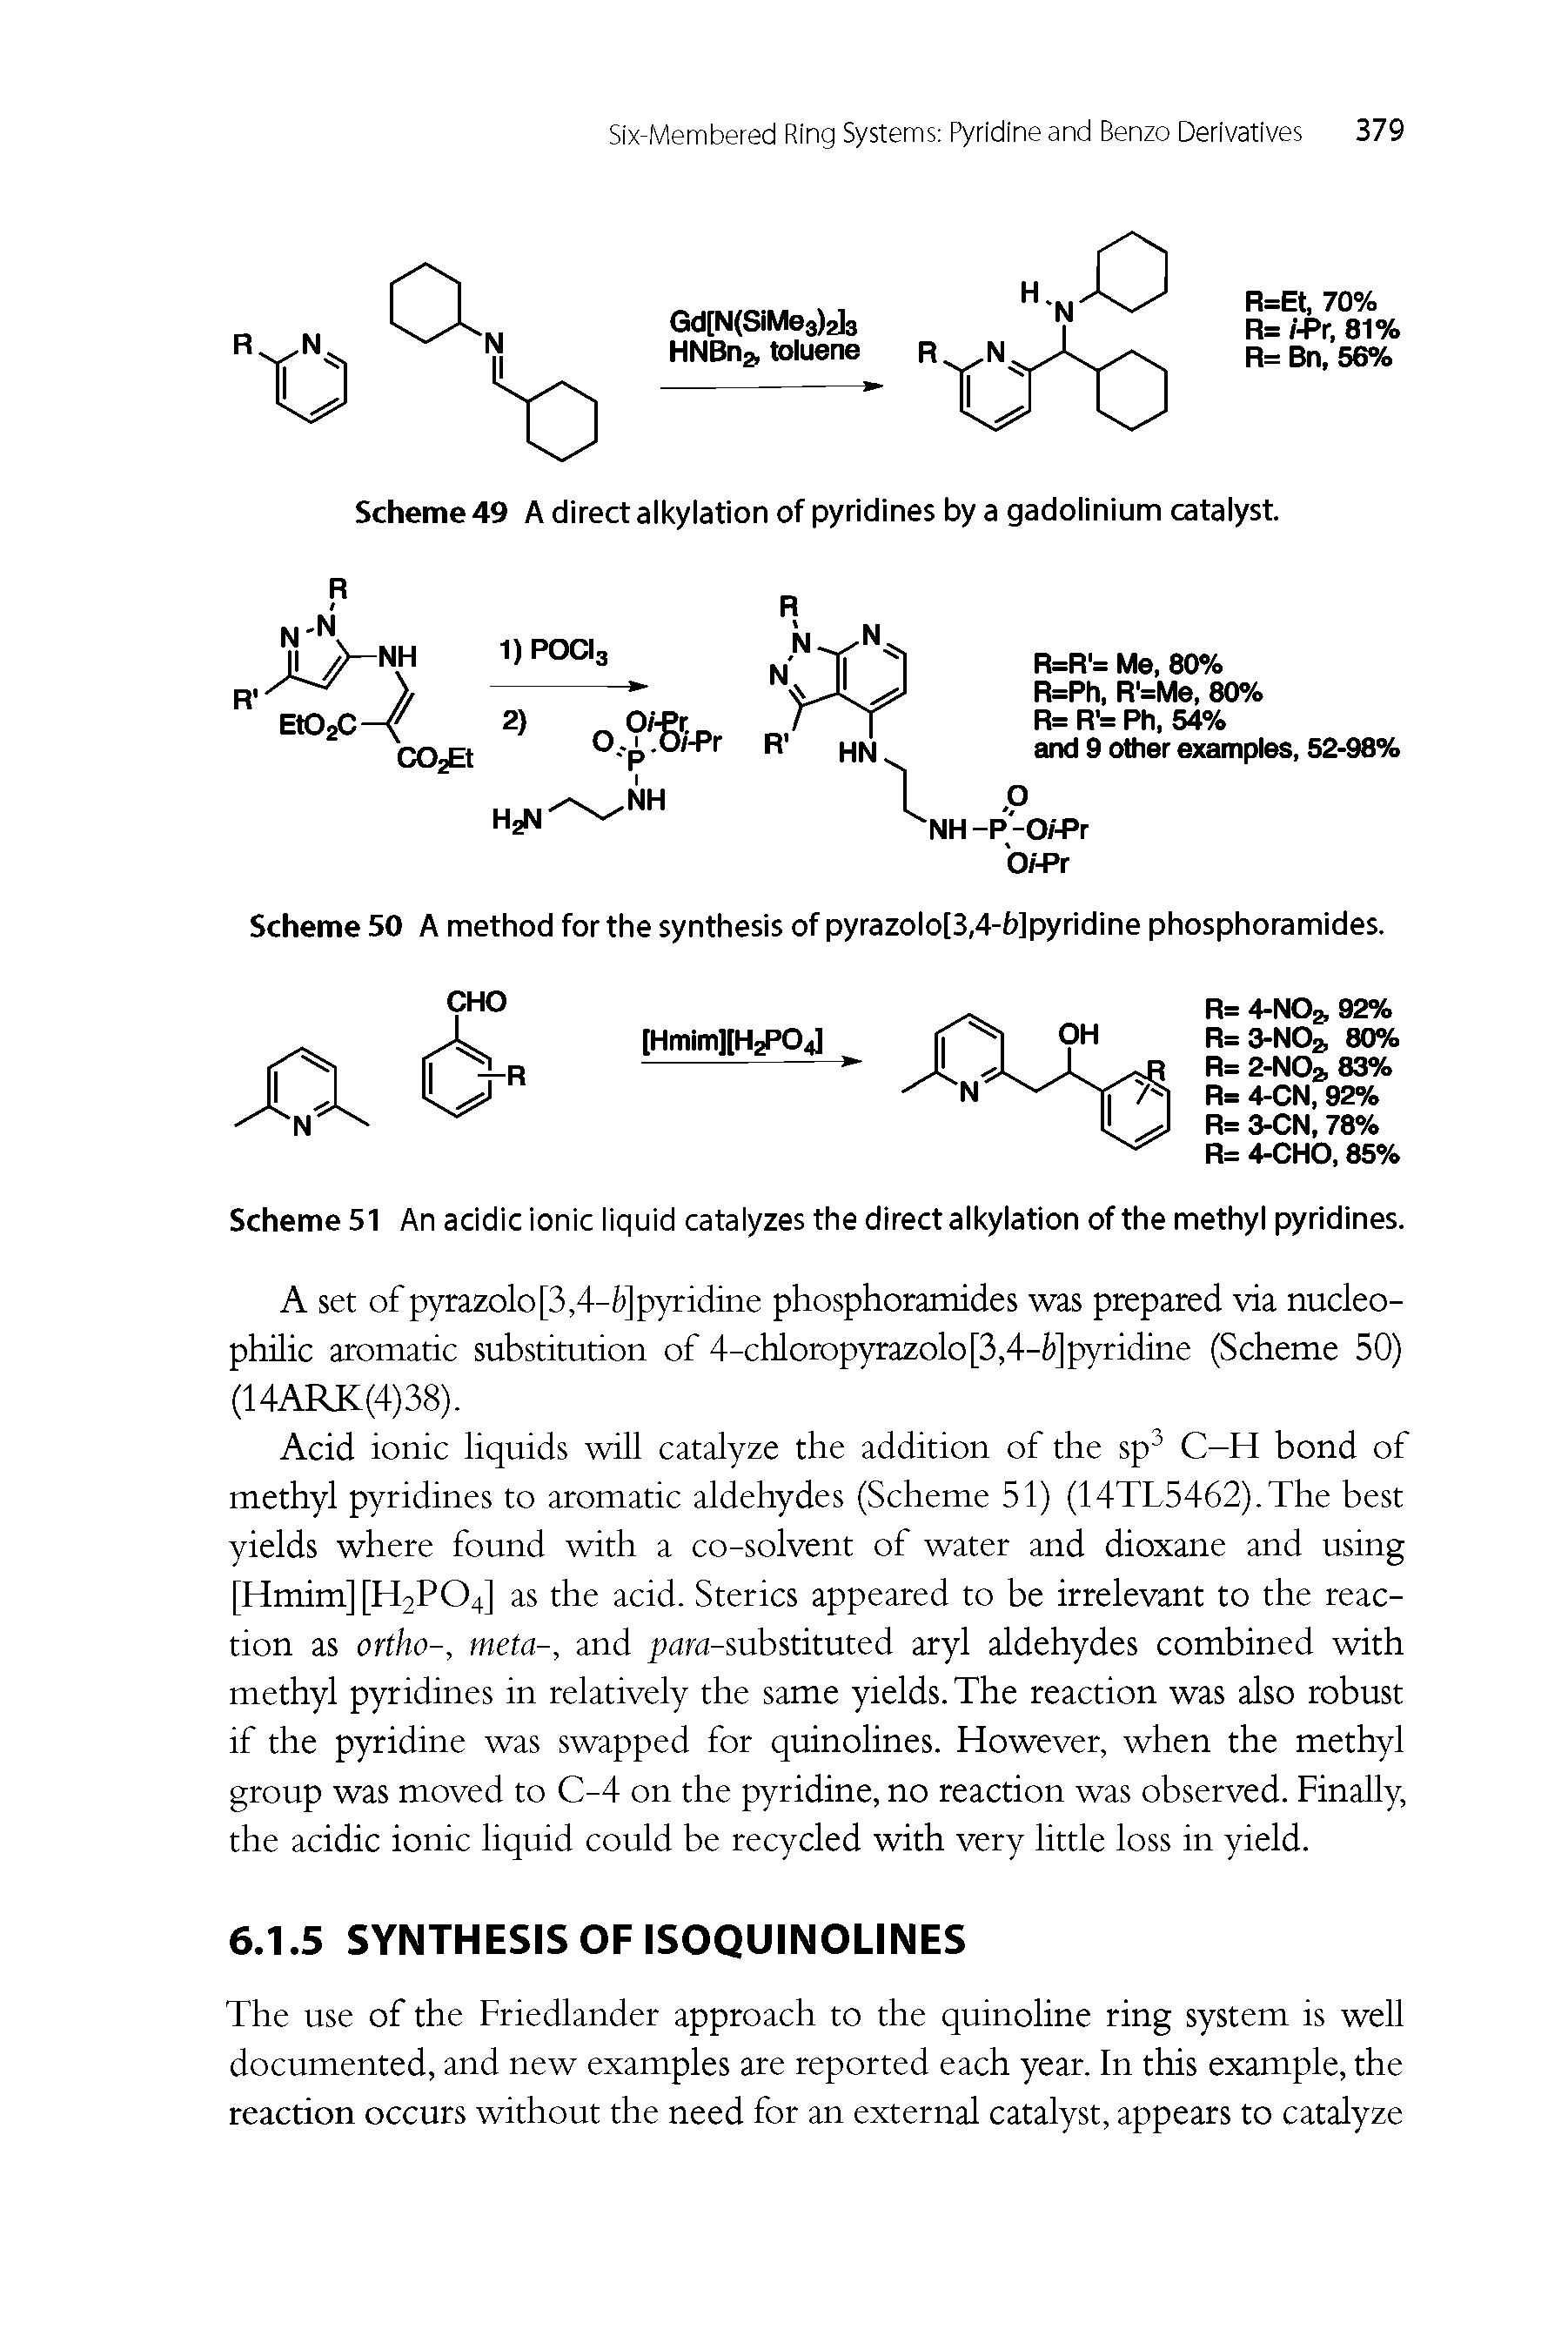 Scheme 51 An acidic ionic liquid catalyzes the direct alkylation of the methyl pyridines.